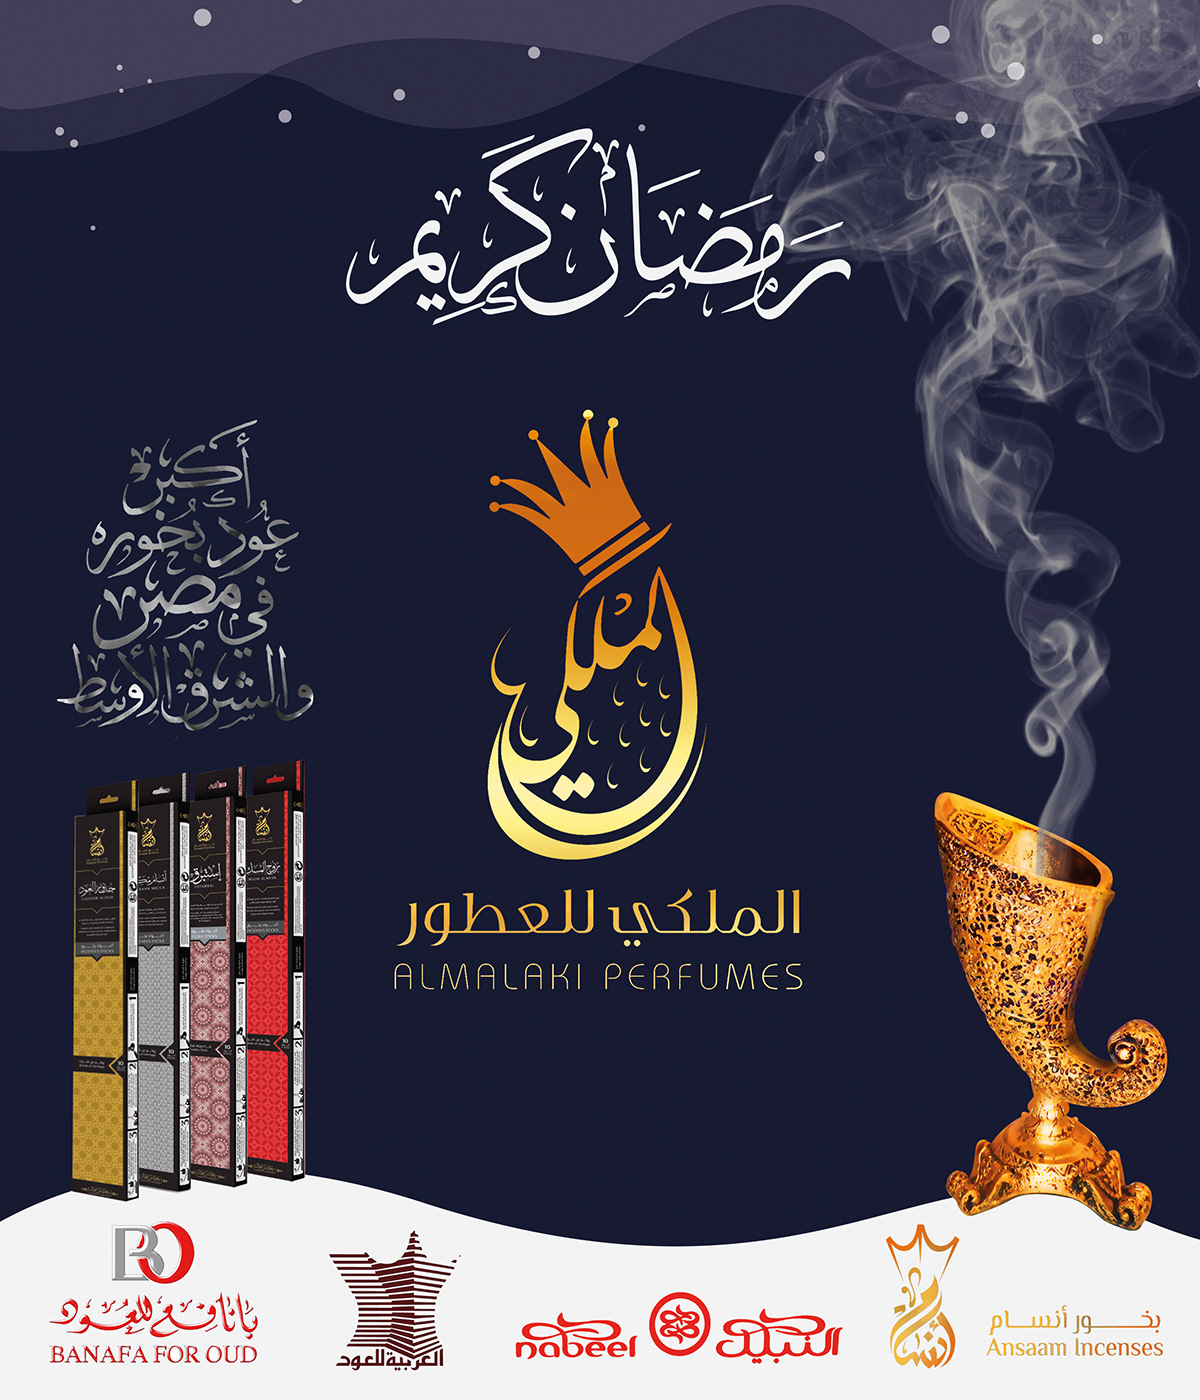 arabian egypt fragrances gewels gold hurghada Incense Perfumes products royal